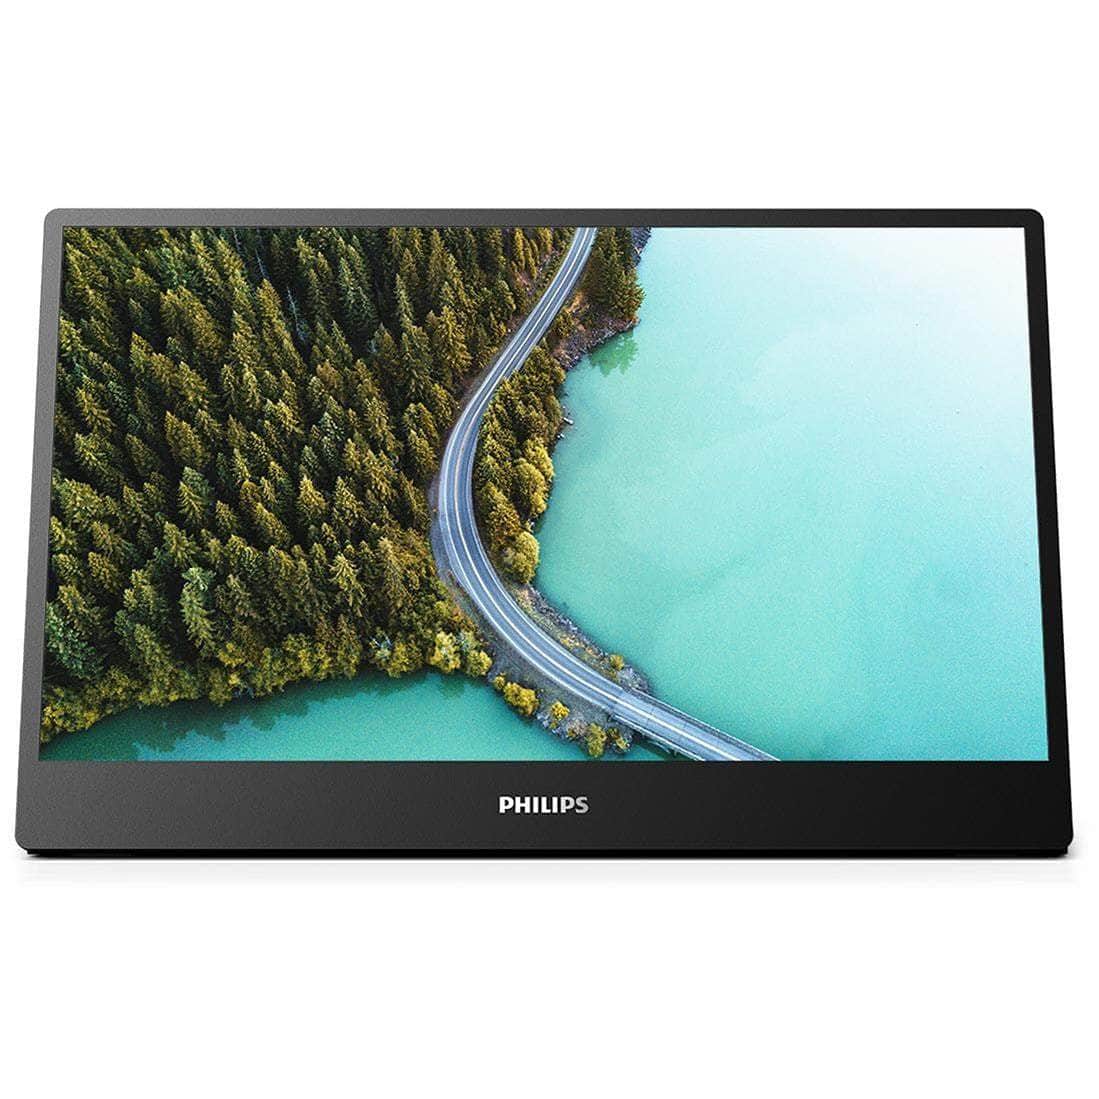 Philips 16B1P3300 15.6' Full HD IPS Portable Monitor